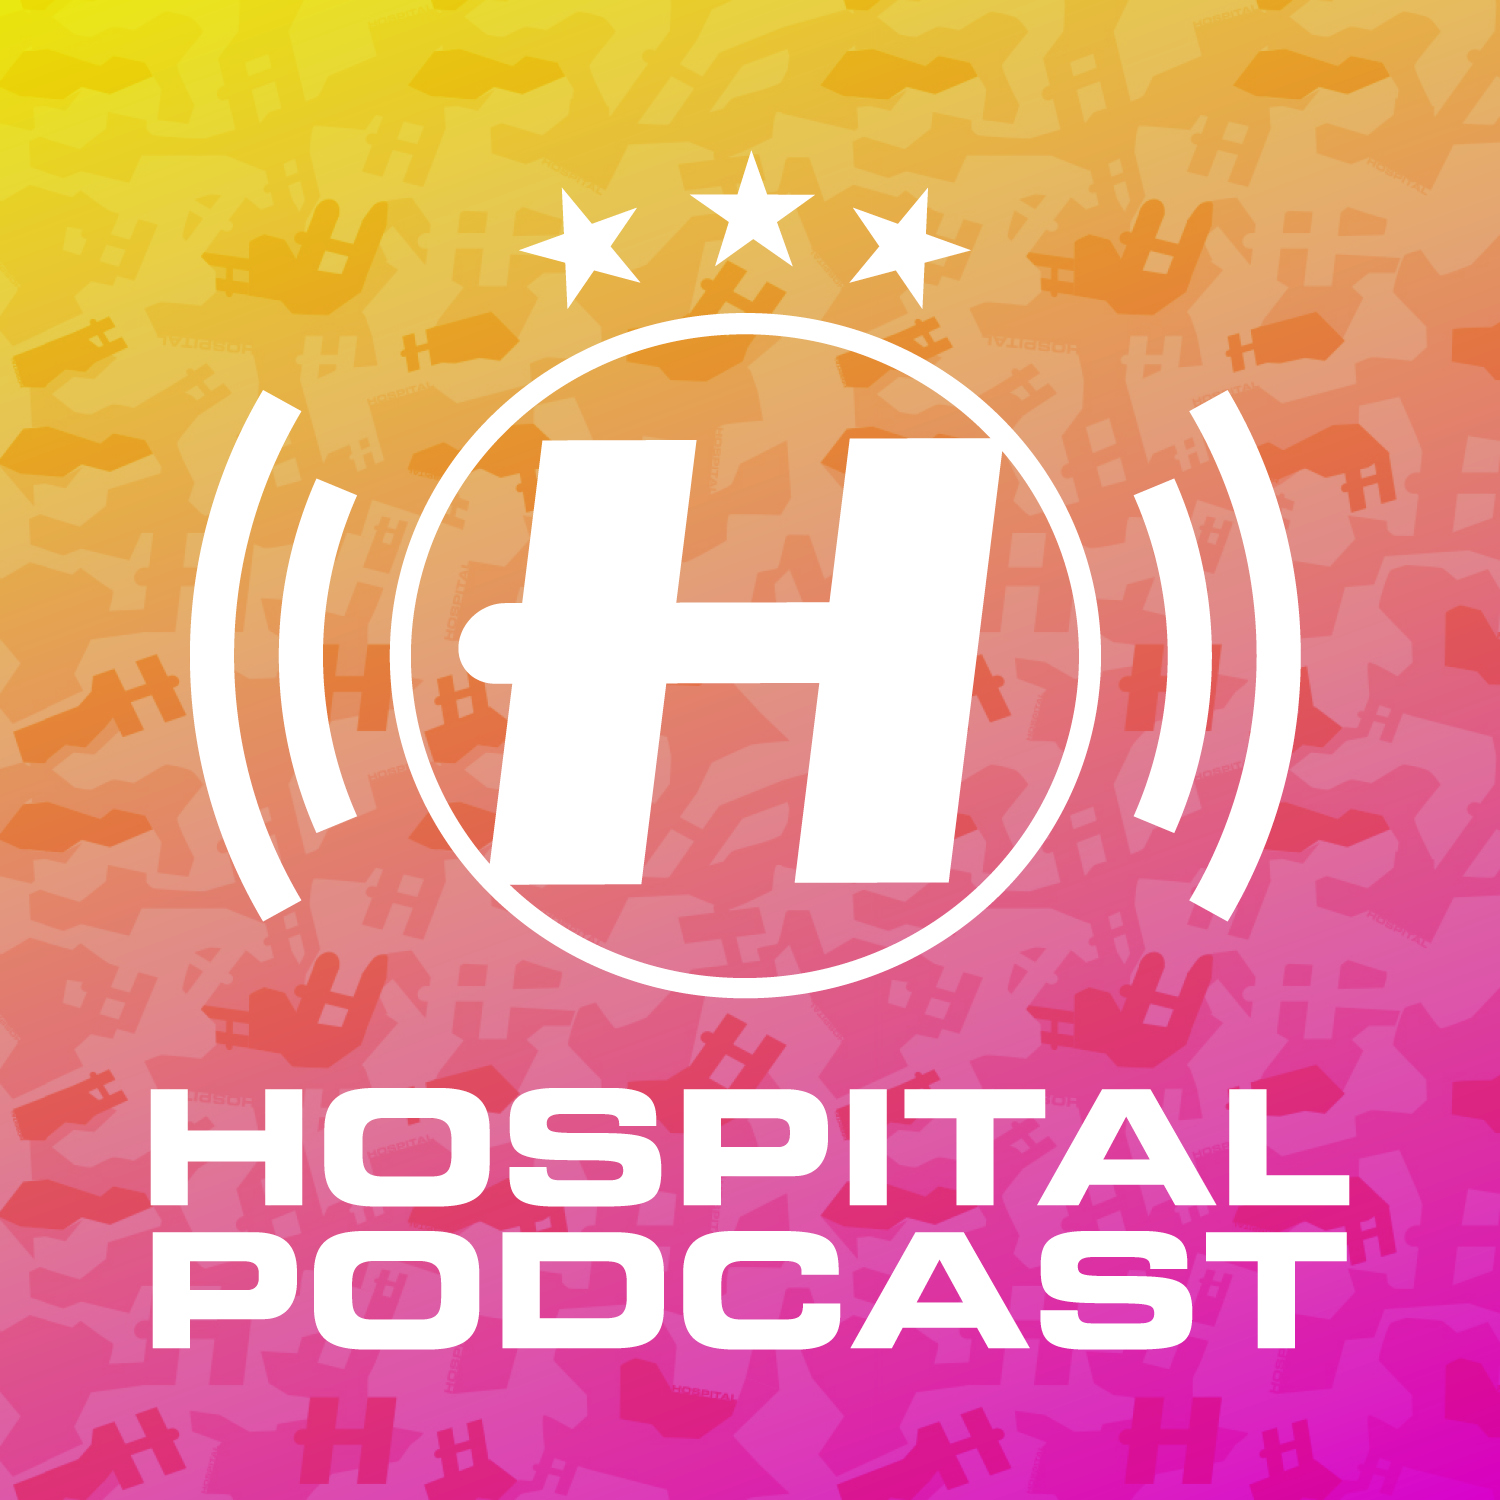 Hospital Podcast 399 with London Elektricity Artwork